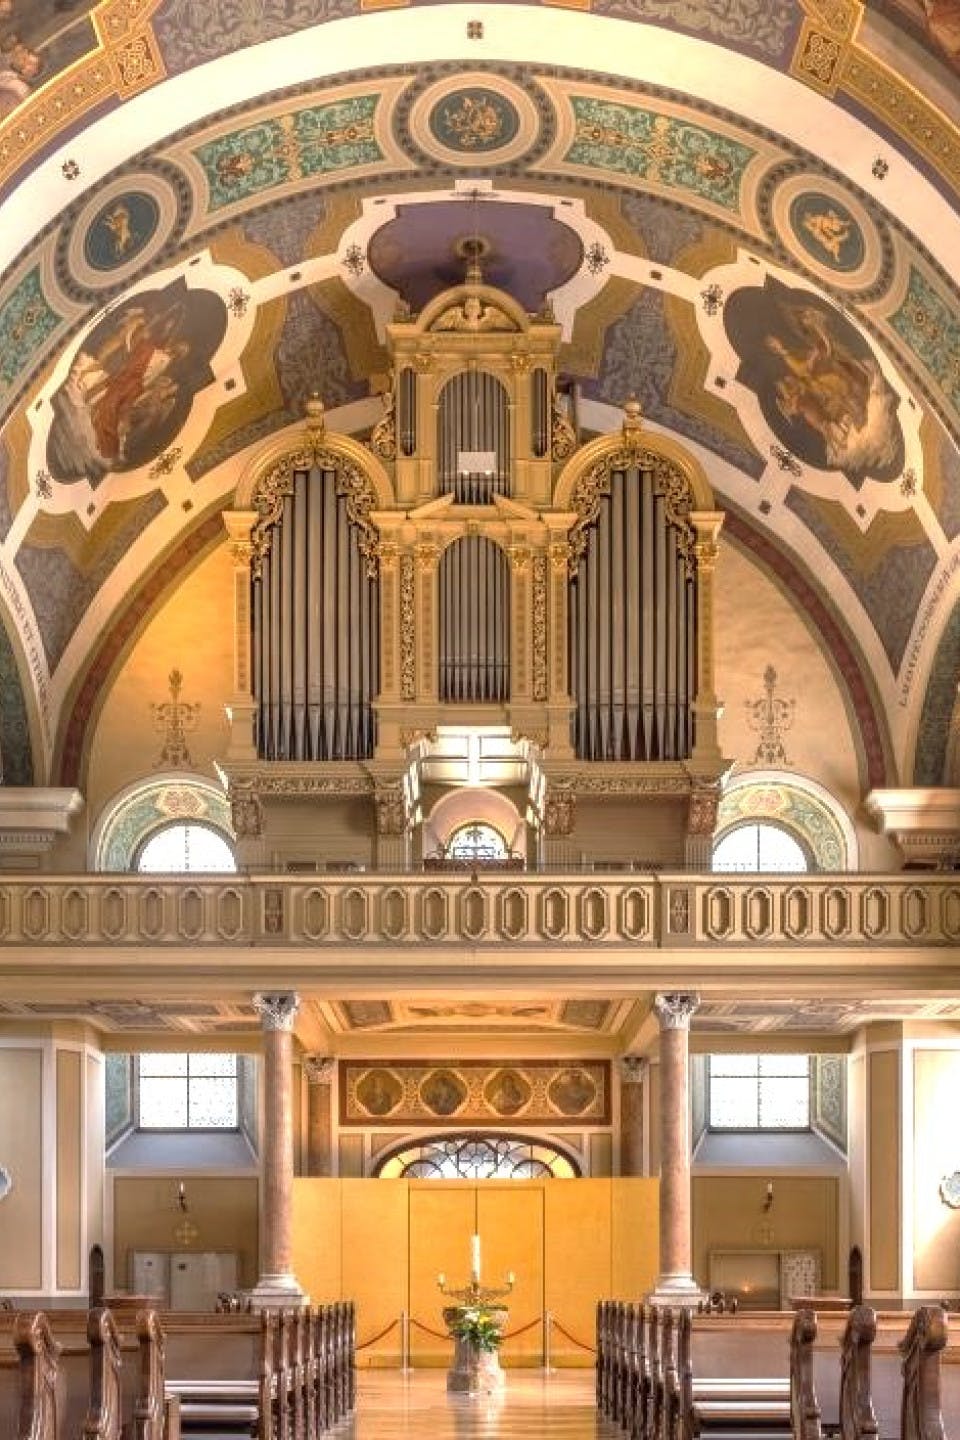 Historic organ in Bad Ischl sounds again